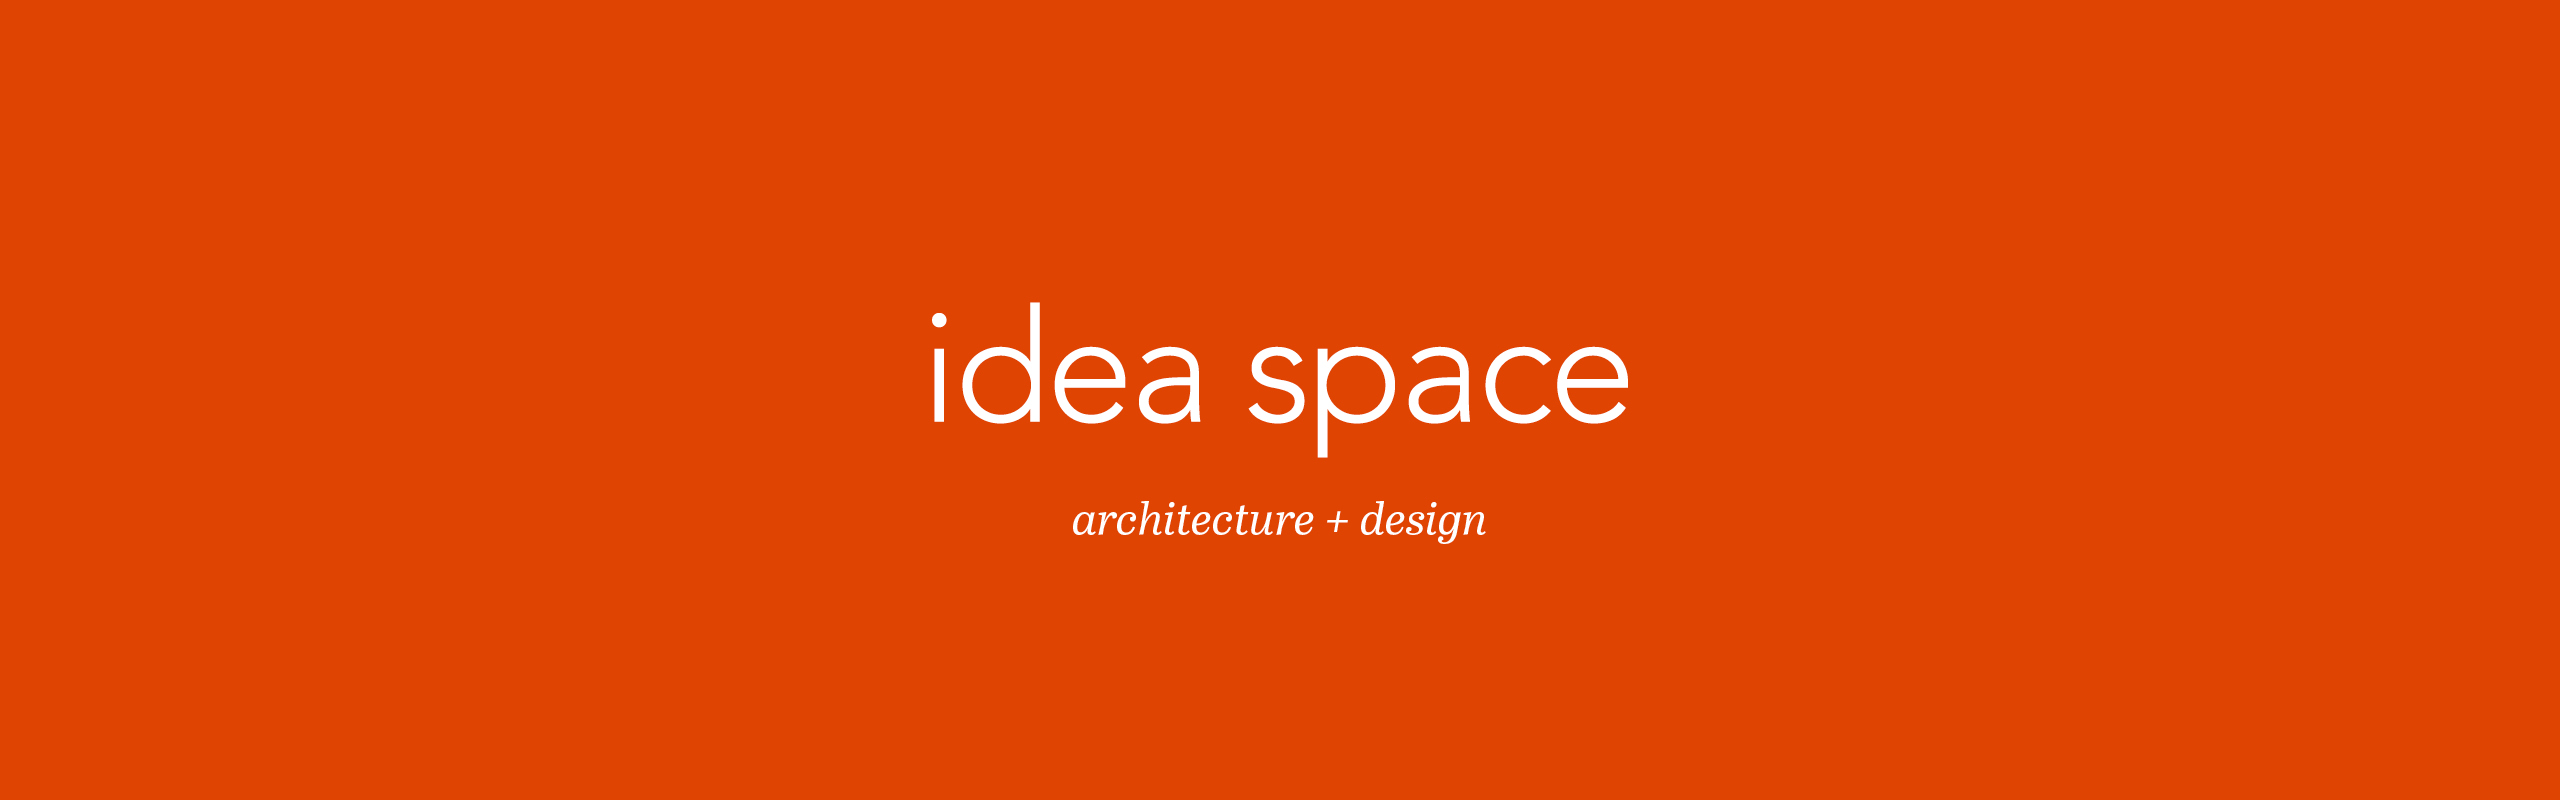 ideaspace-case-study-02